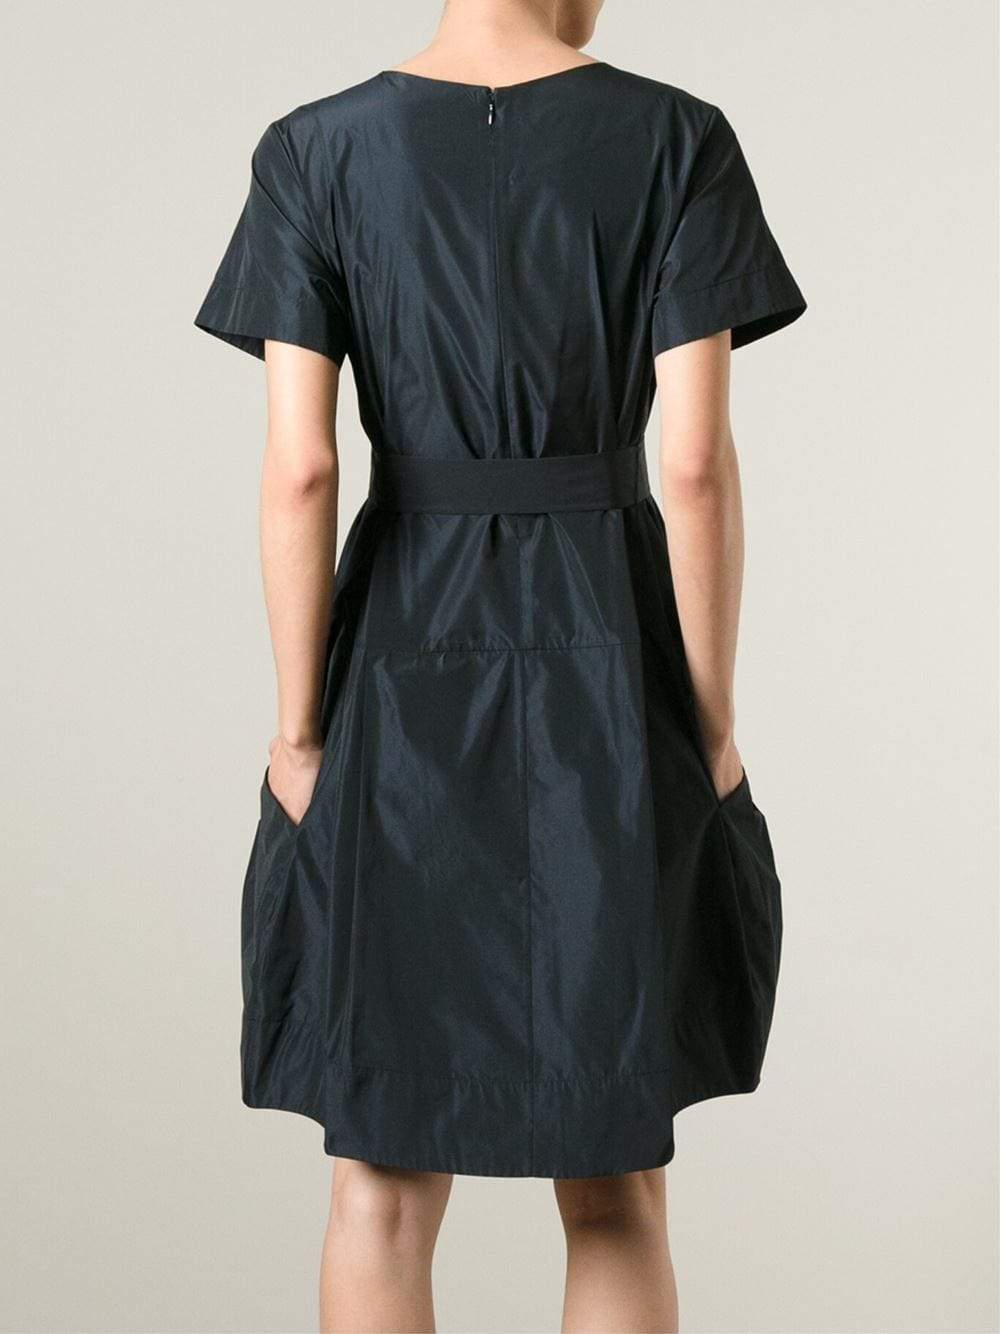 Belted Dress With Pockets CLOTHINGDRESSCASUAL JIL SANDER NAVY   